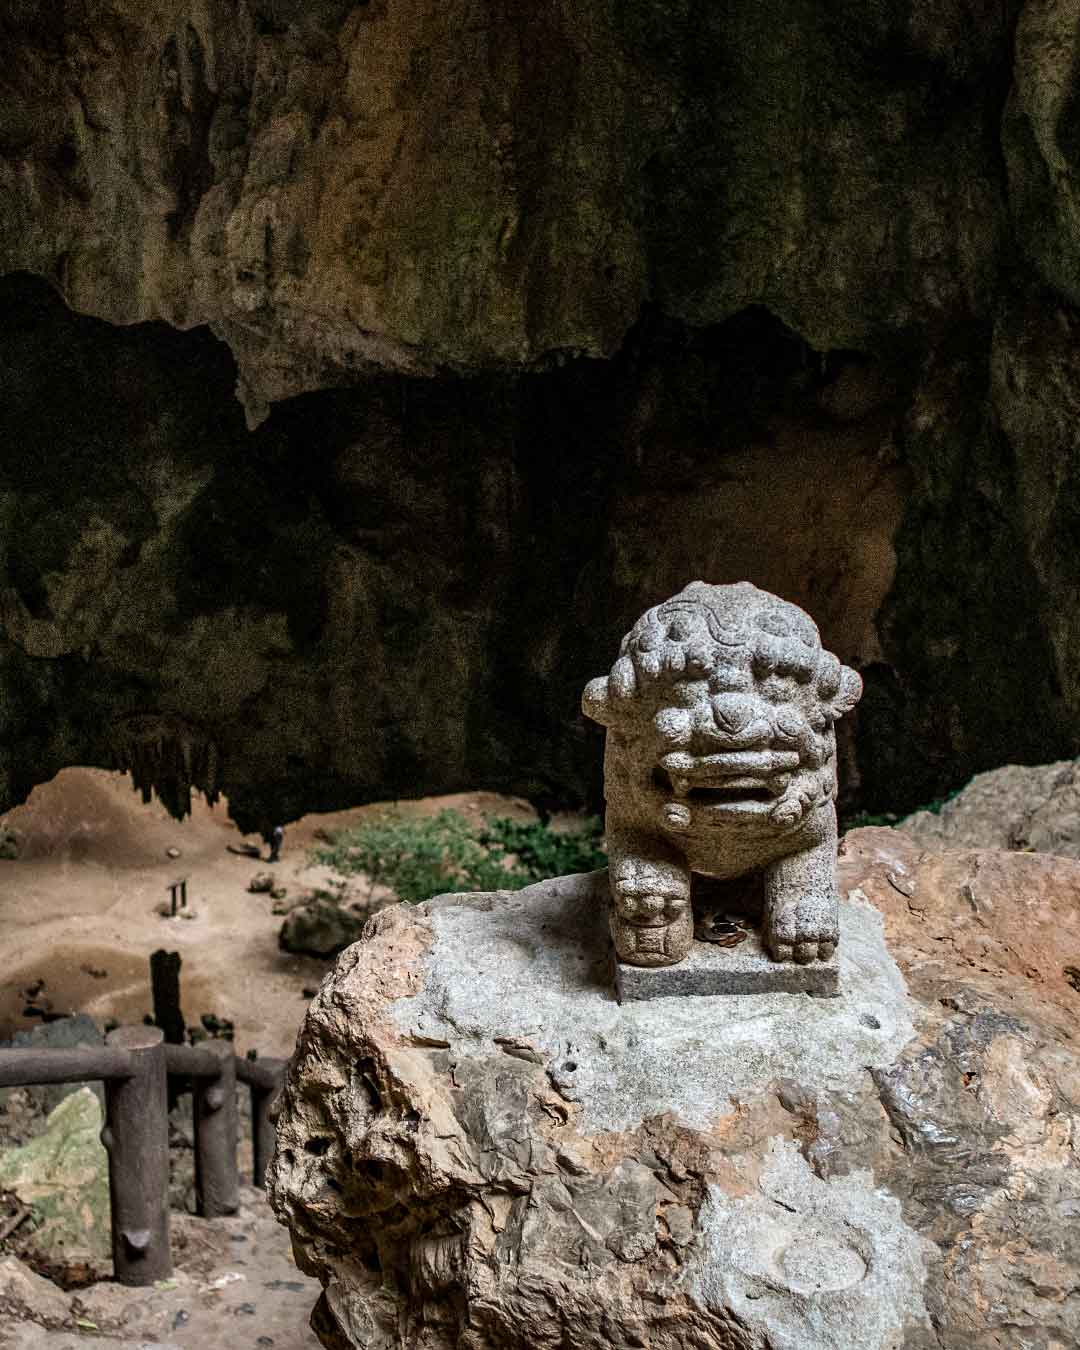 Stone Lion guarding the entrance to Phraya Nakhon Cave